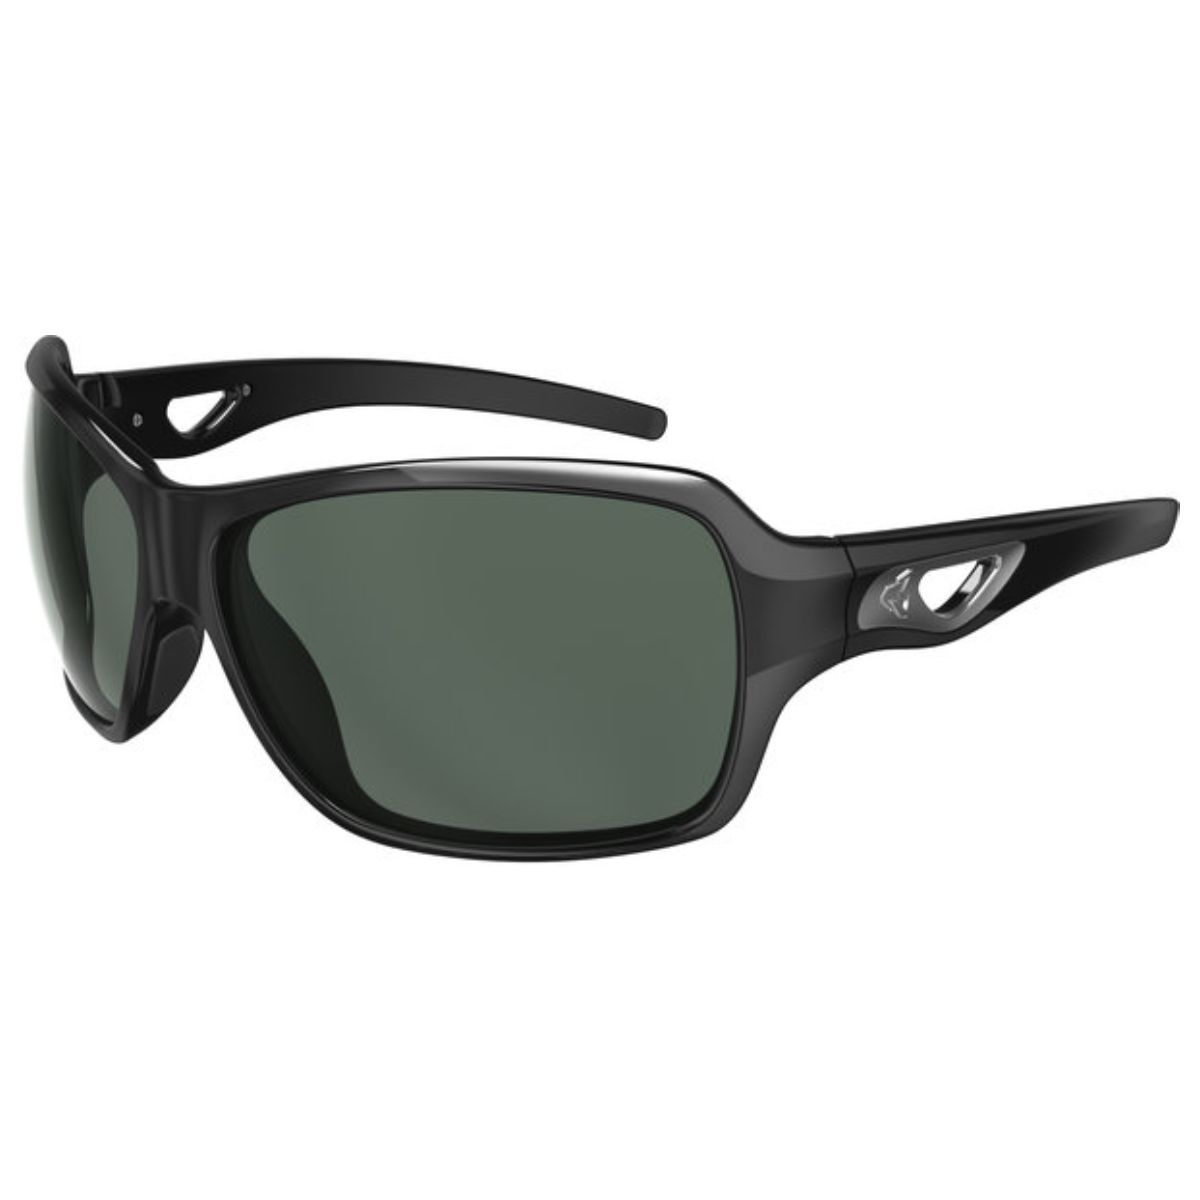 Ryders Carlita Sunglasses Matte Black - Green Lenses